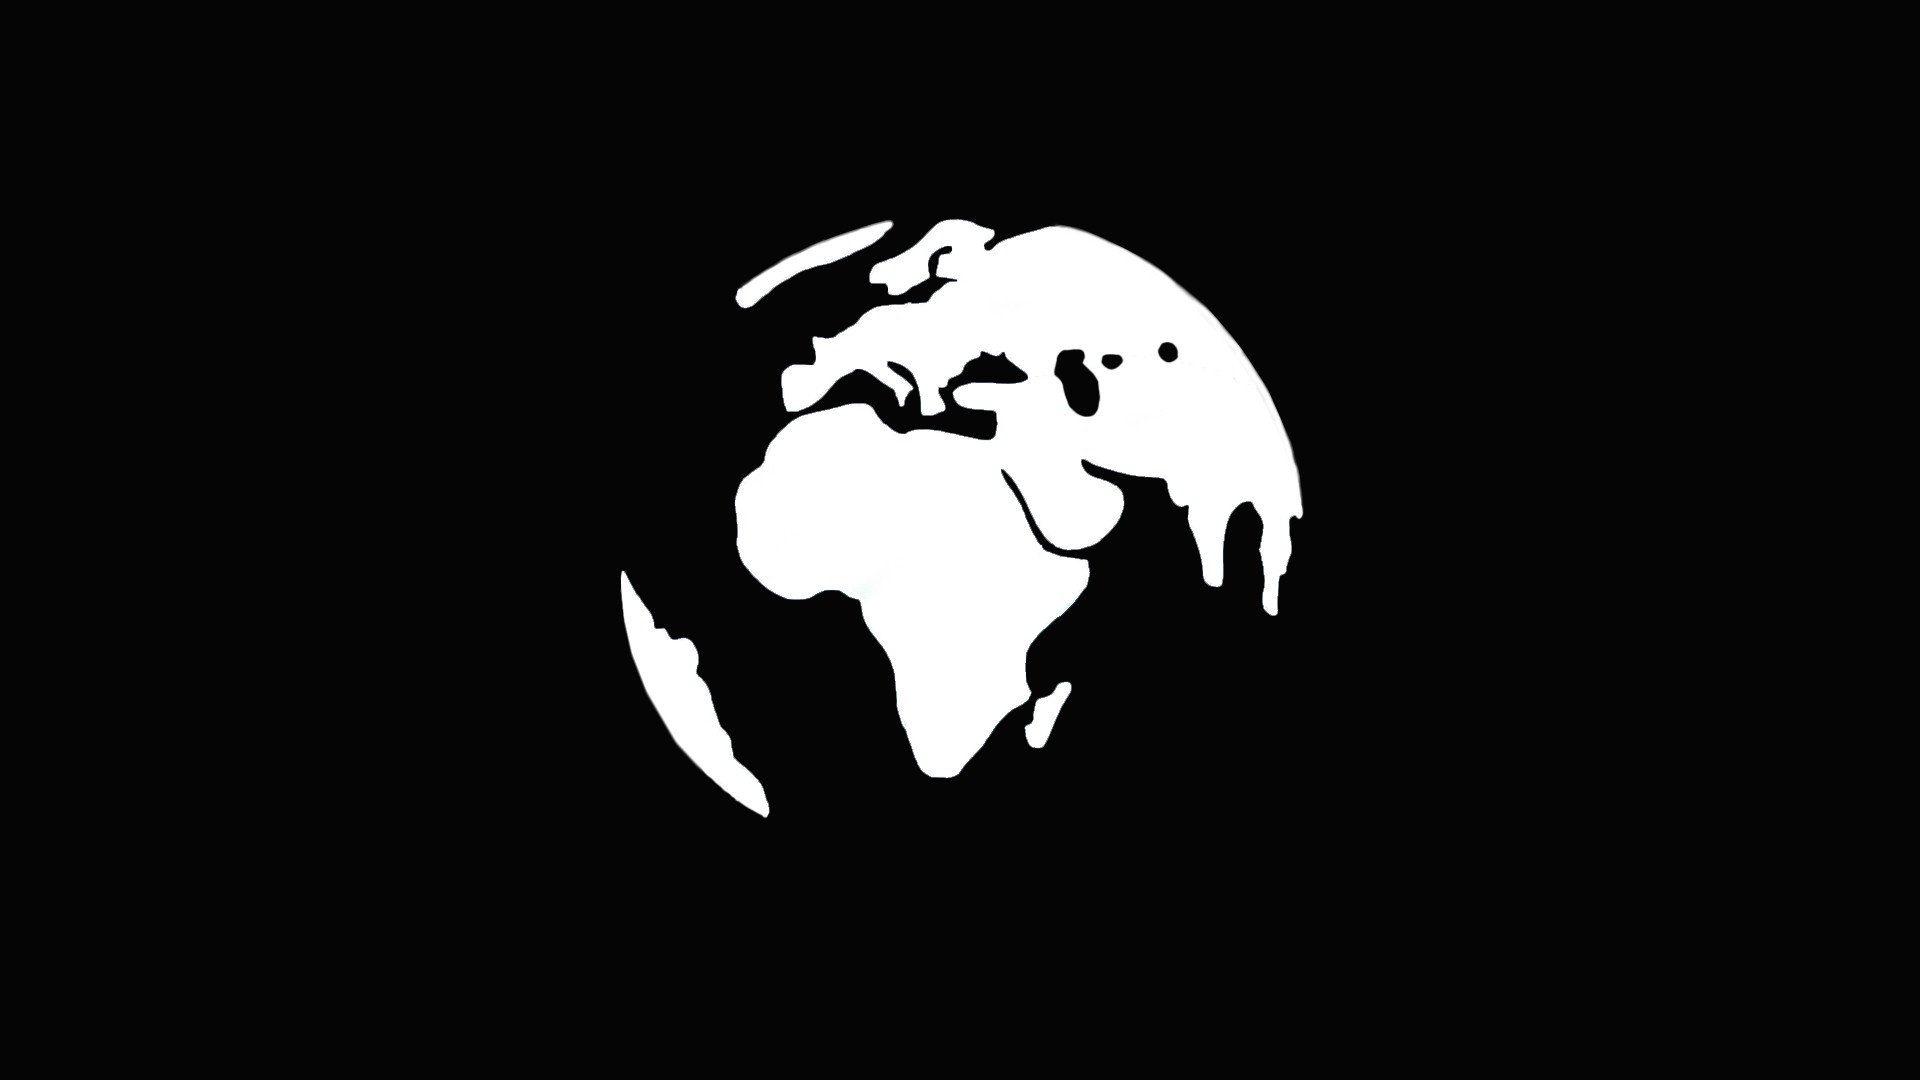 World Minimalism Simple Black White Continents Africa Europe